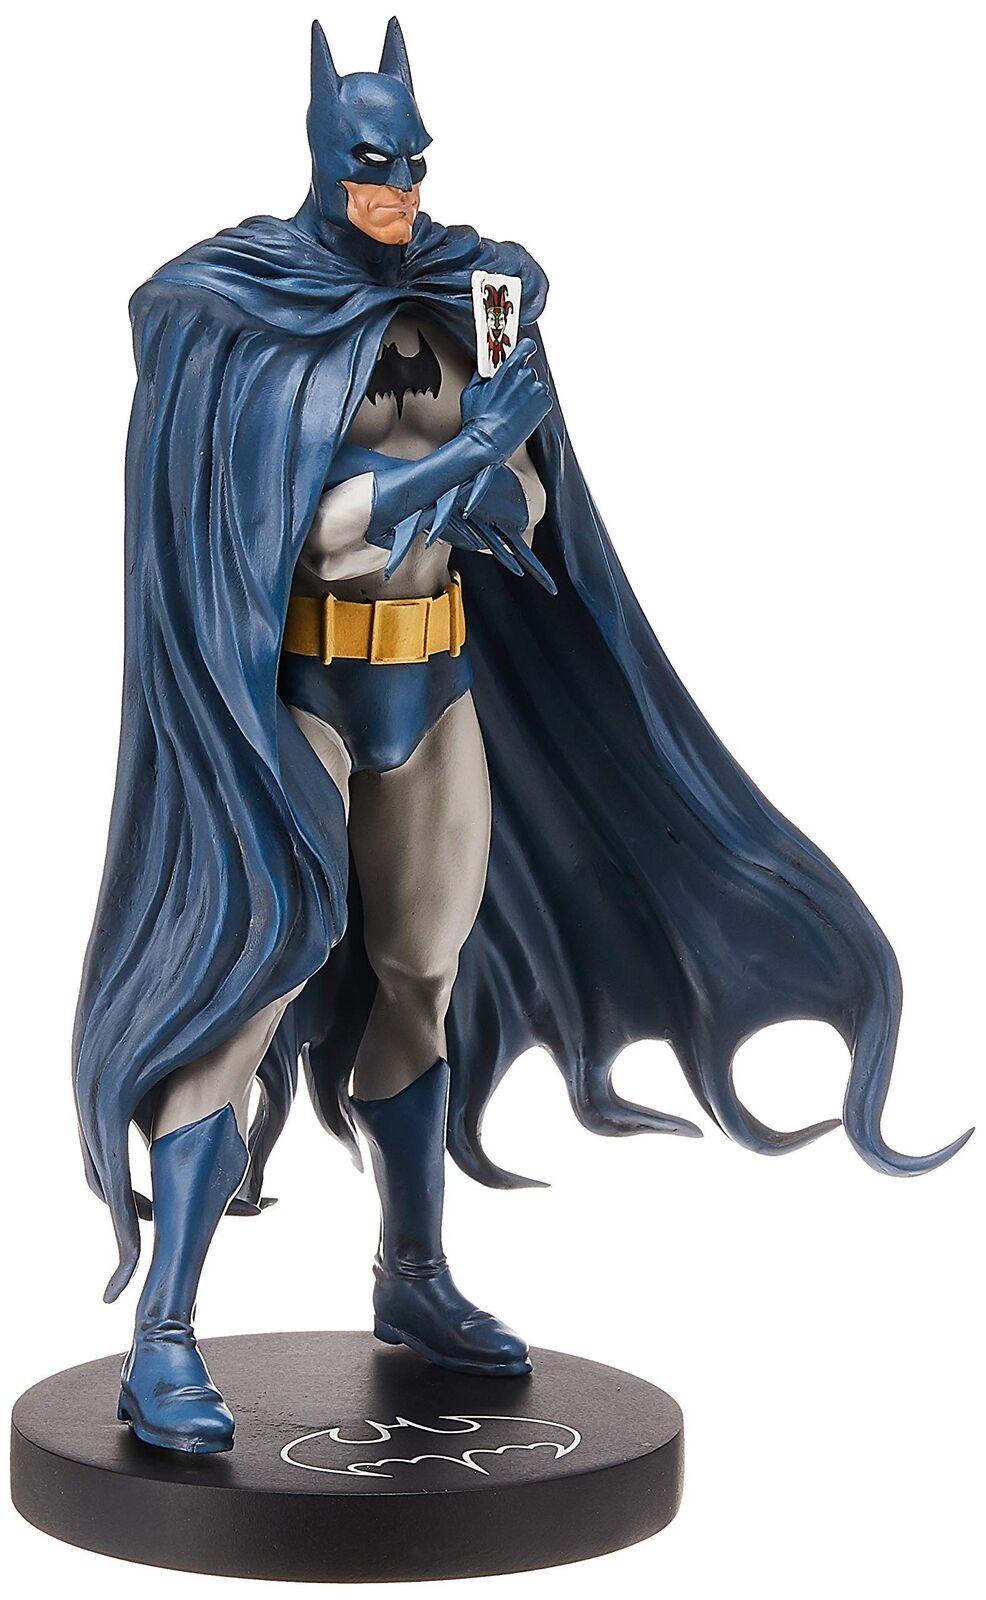 DC Collectibles DC Designer Series: Mini Batman Statue by Brian Bolland